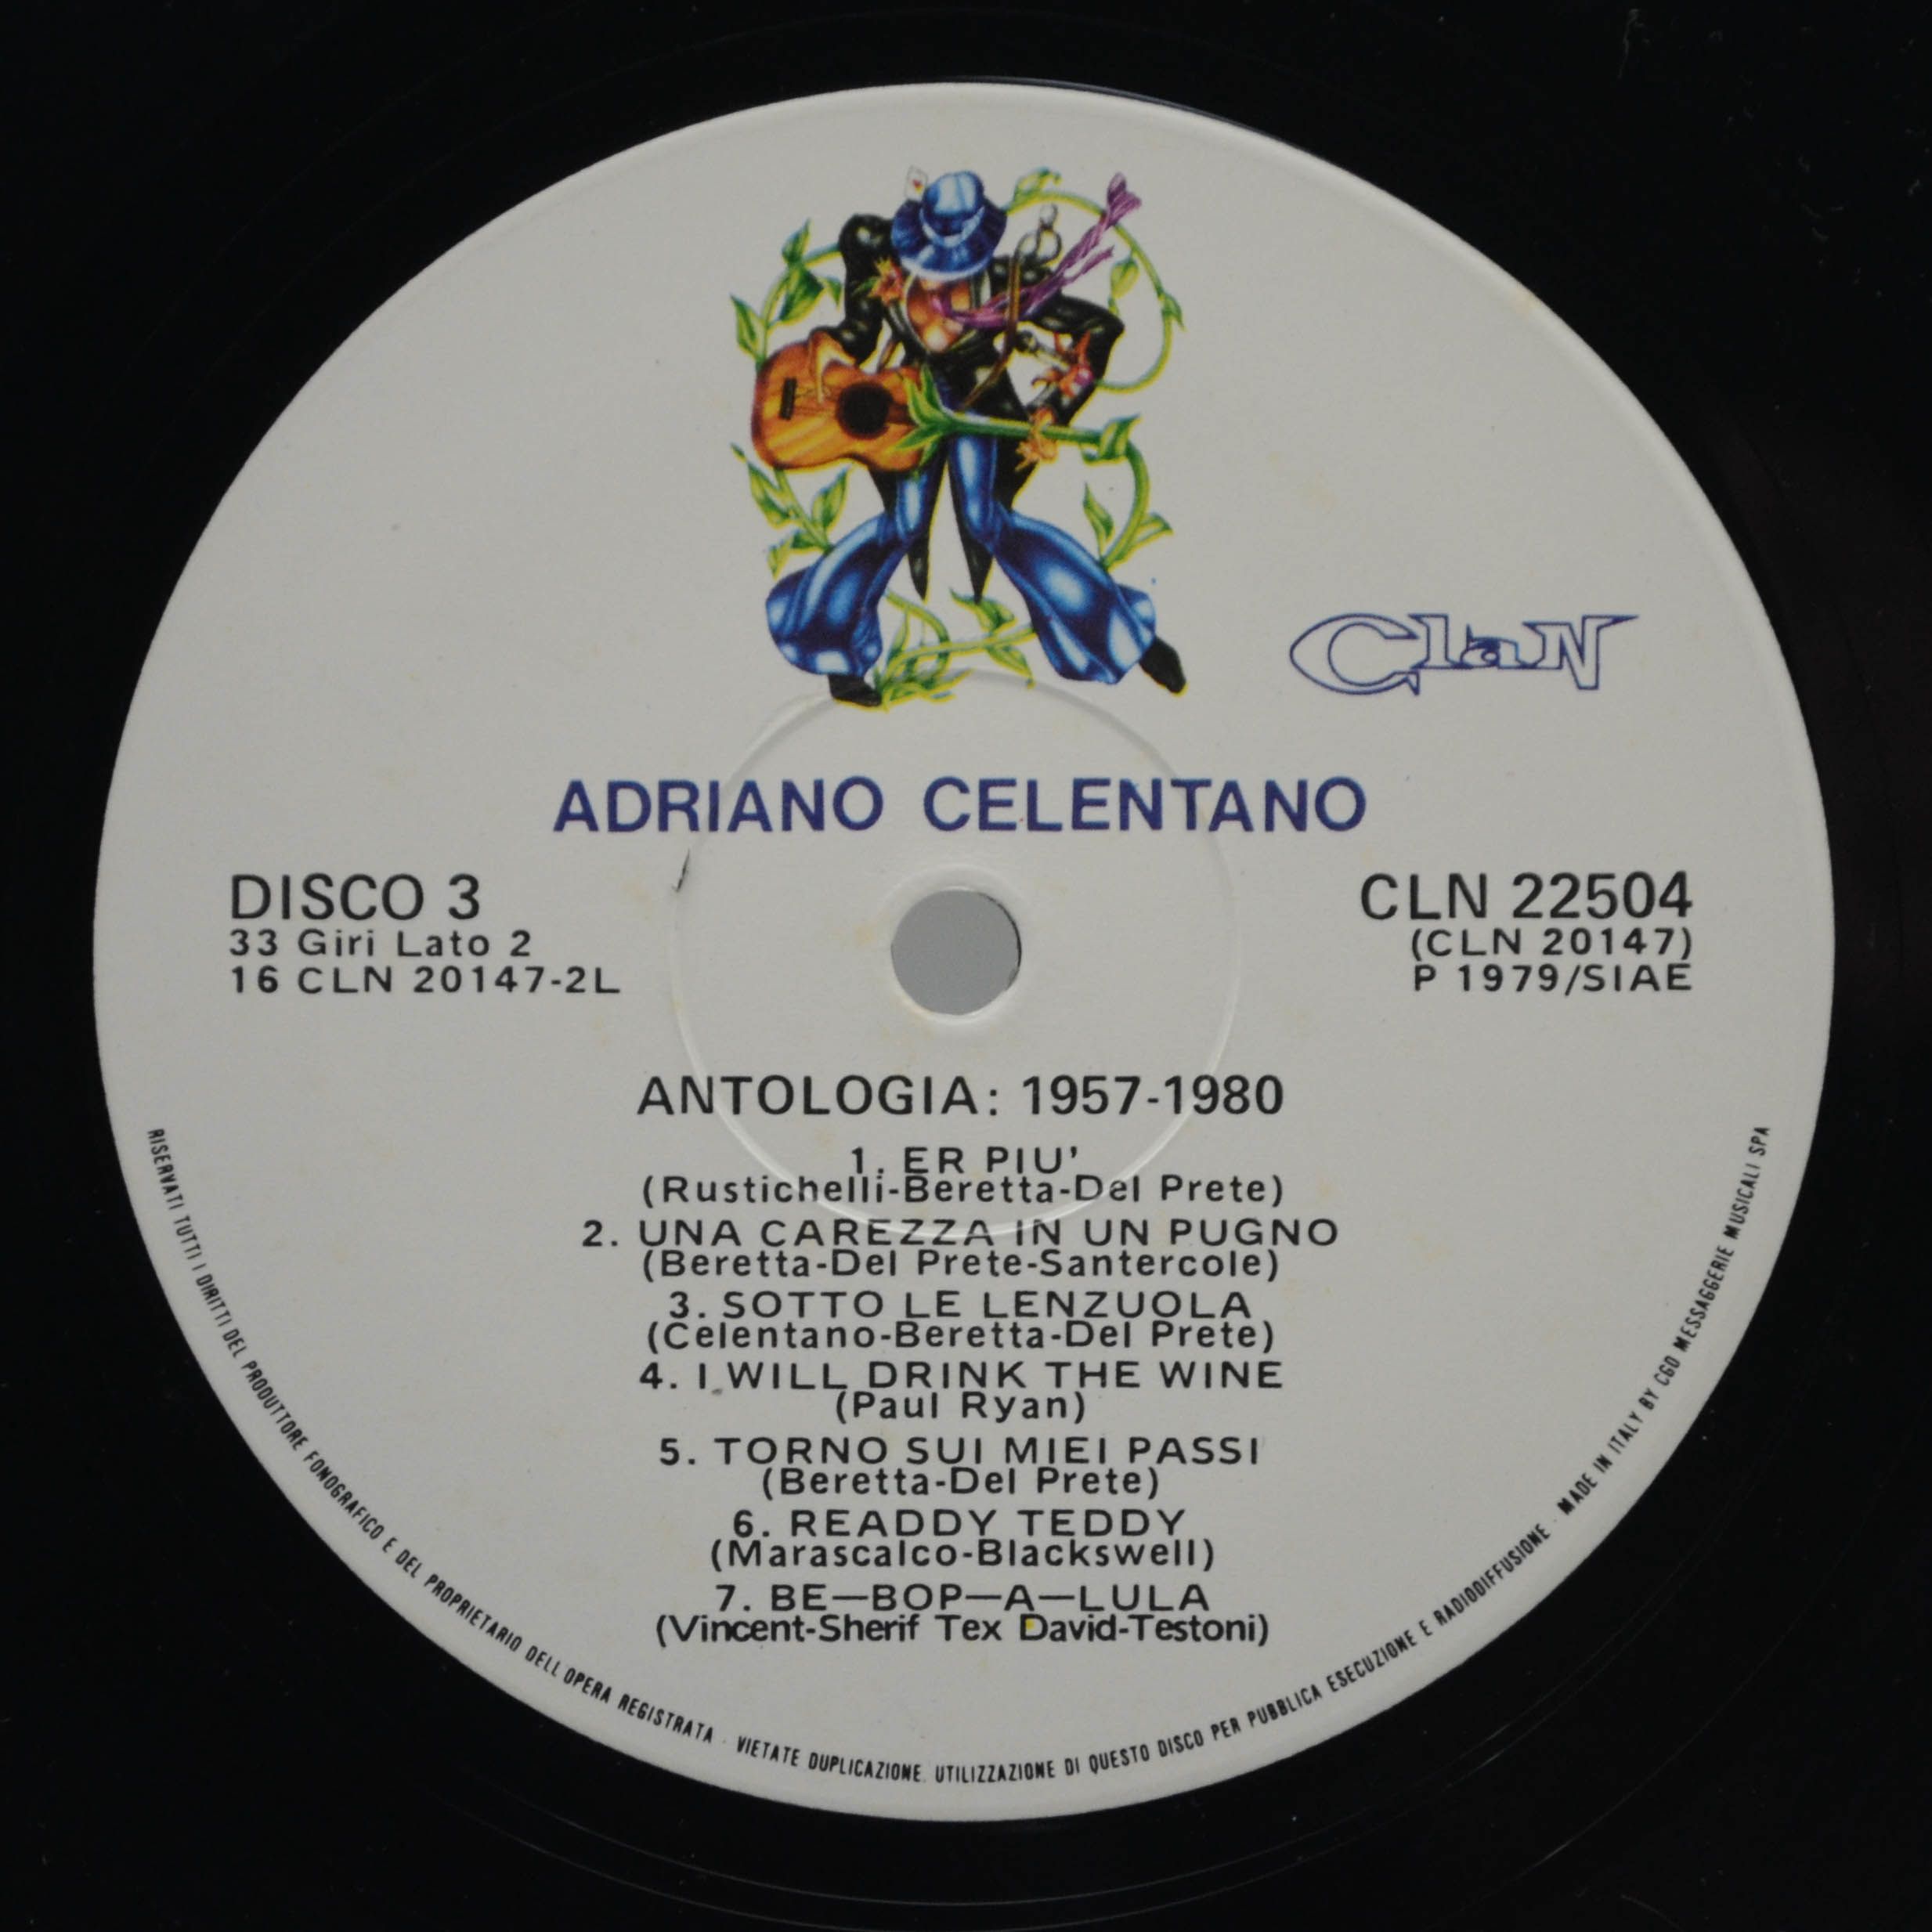 Adriano Celentano — Antologia (1957-1980) (5LP, Box-set, booklet, 1-st Italy, Clan), 1980